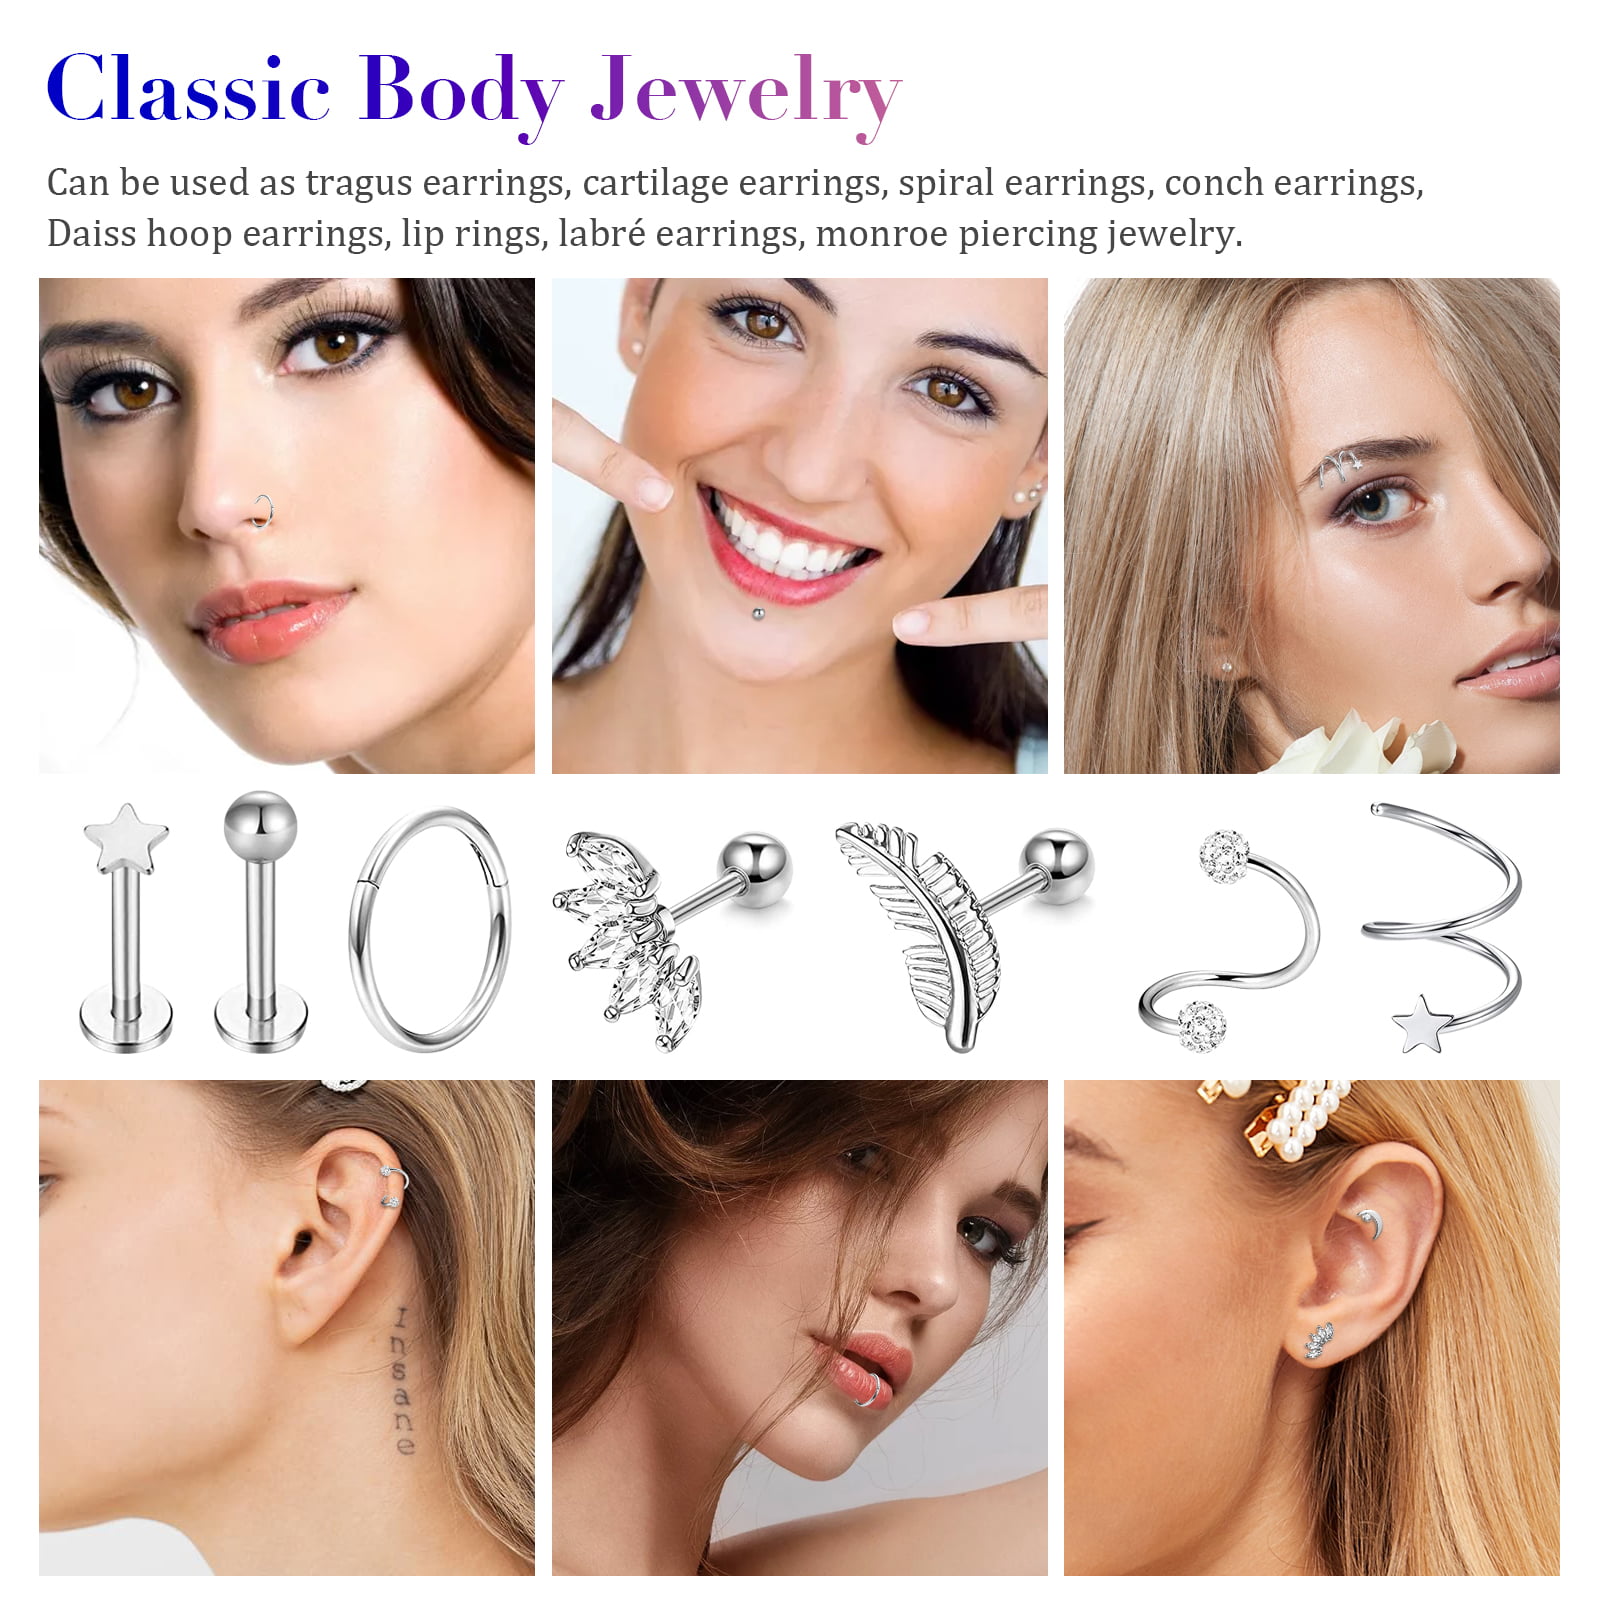  Ubjuliwa 27Pcs 16G Cartilage Earrings Stud Hoop for Women  Stainless Steel Forward Helix Piercing Tragus Earrings Conch Piercing  Jewelry Black : Clothing, Shoes & Jewelry